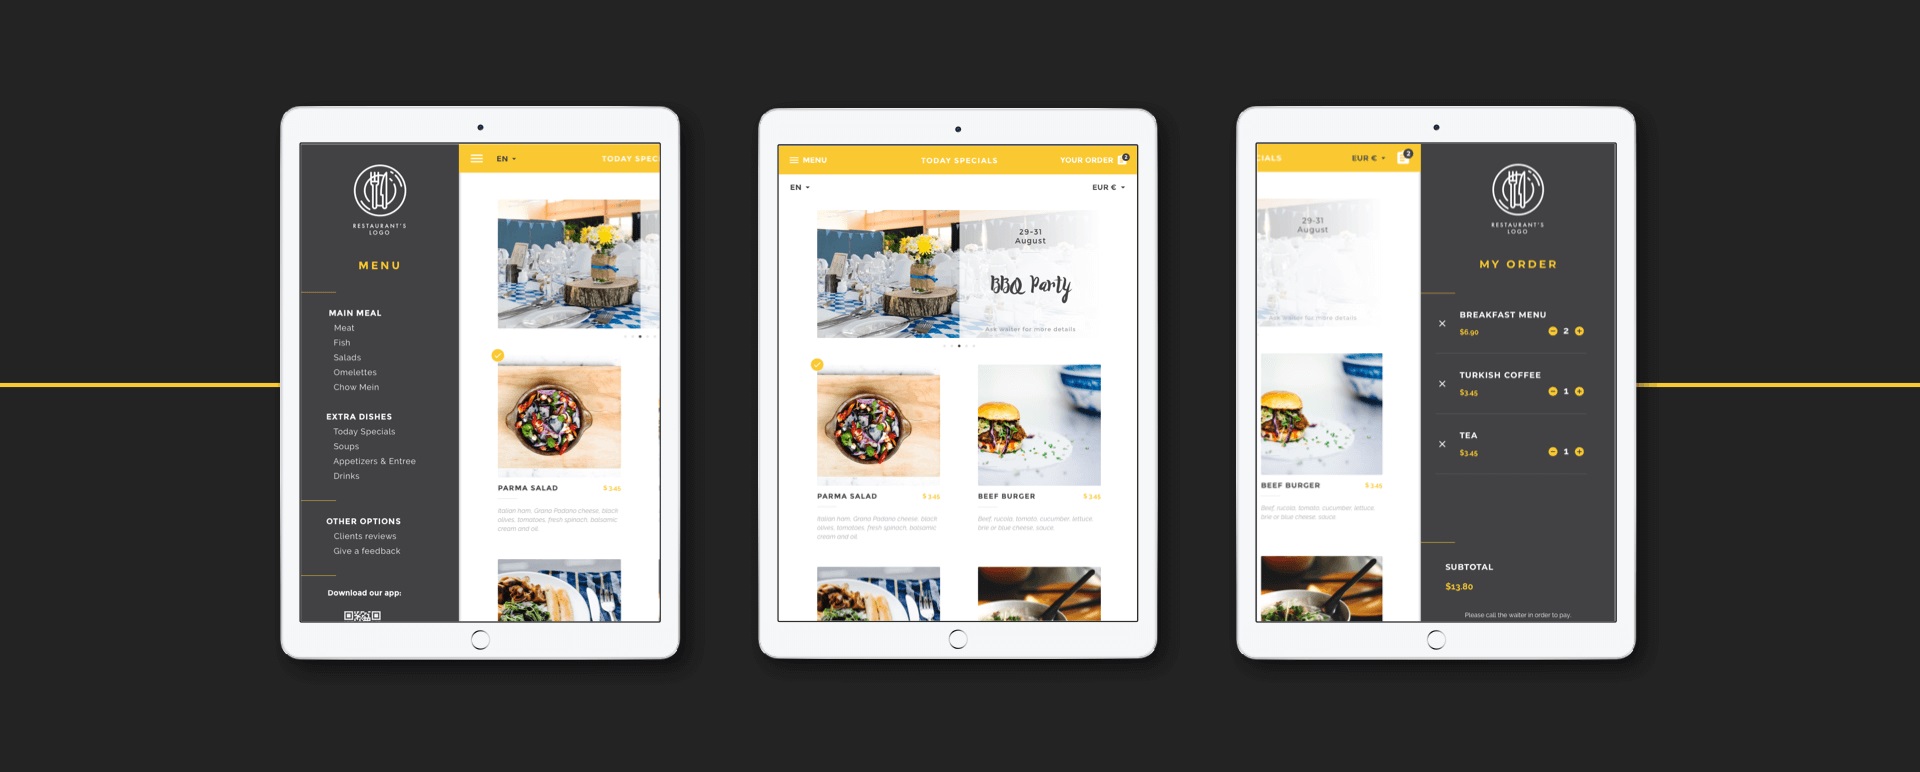 Menu app for different restaurants style